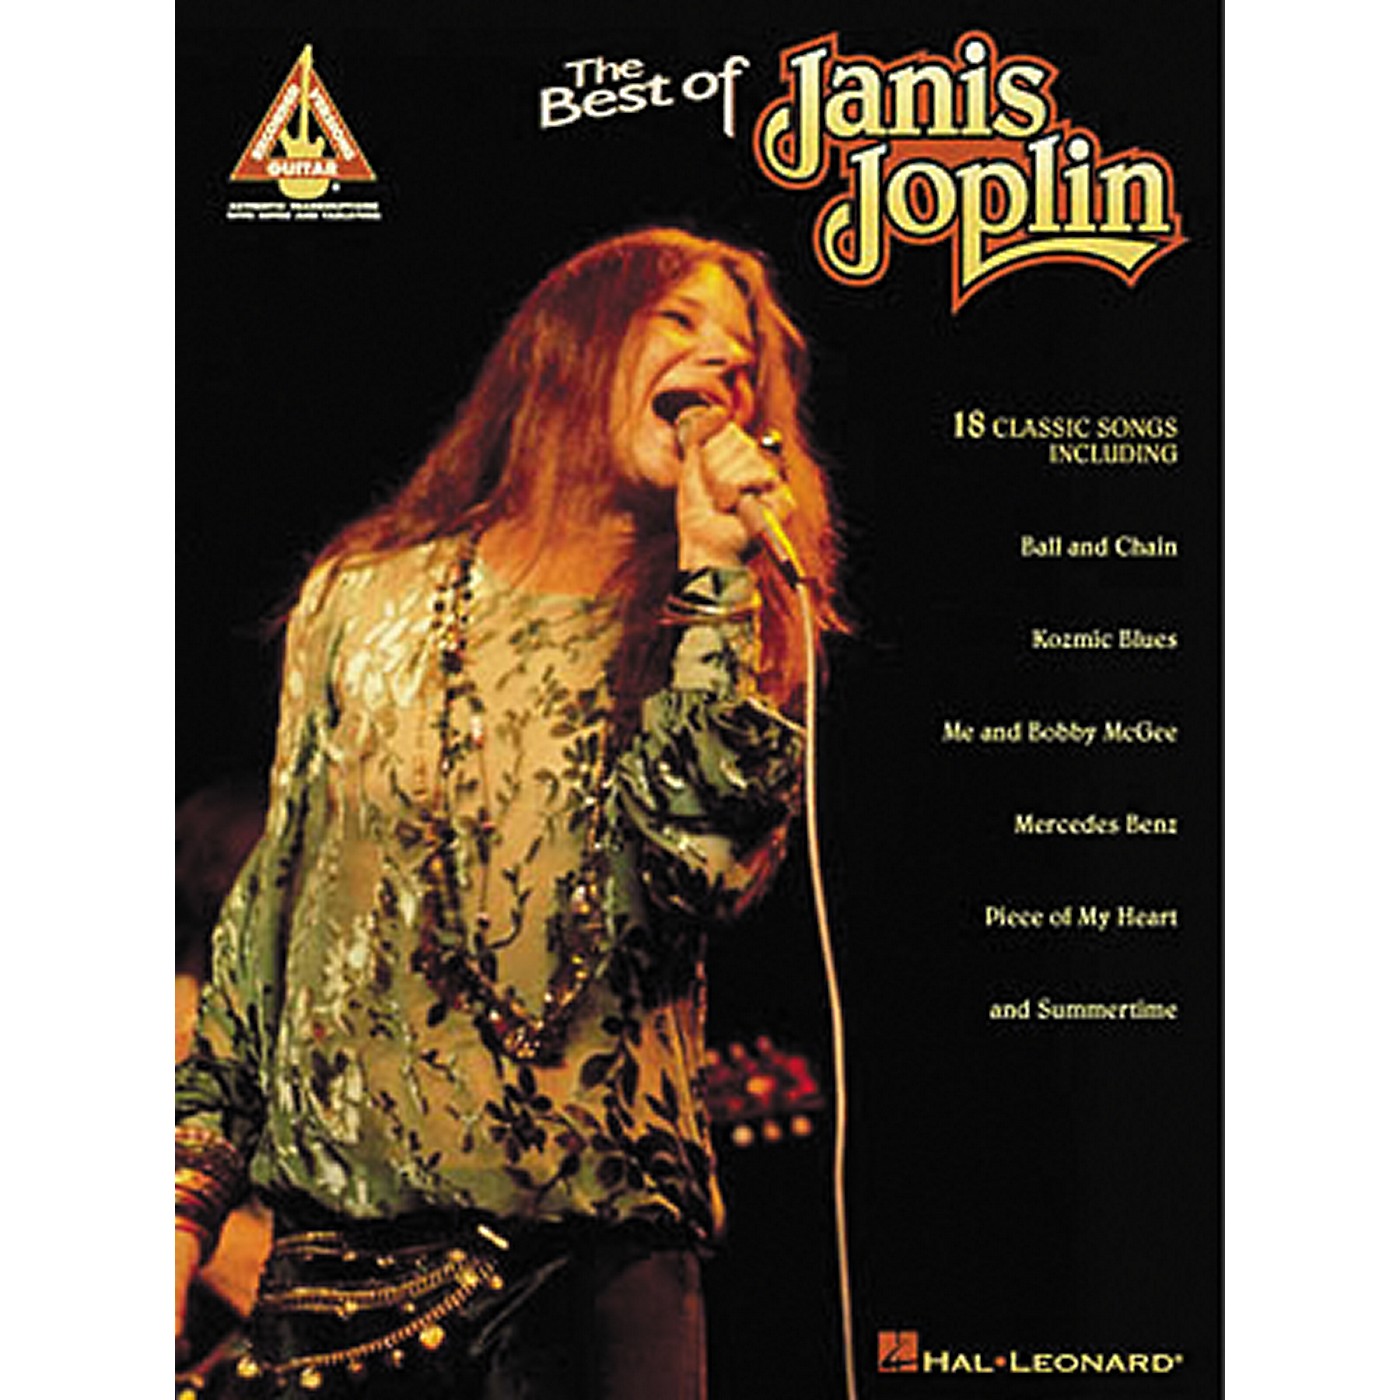 Hal Leonard The Best of Janis Joplin Guitar Tab Songbook thumbnail